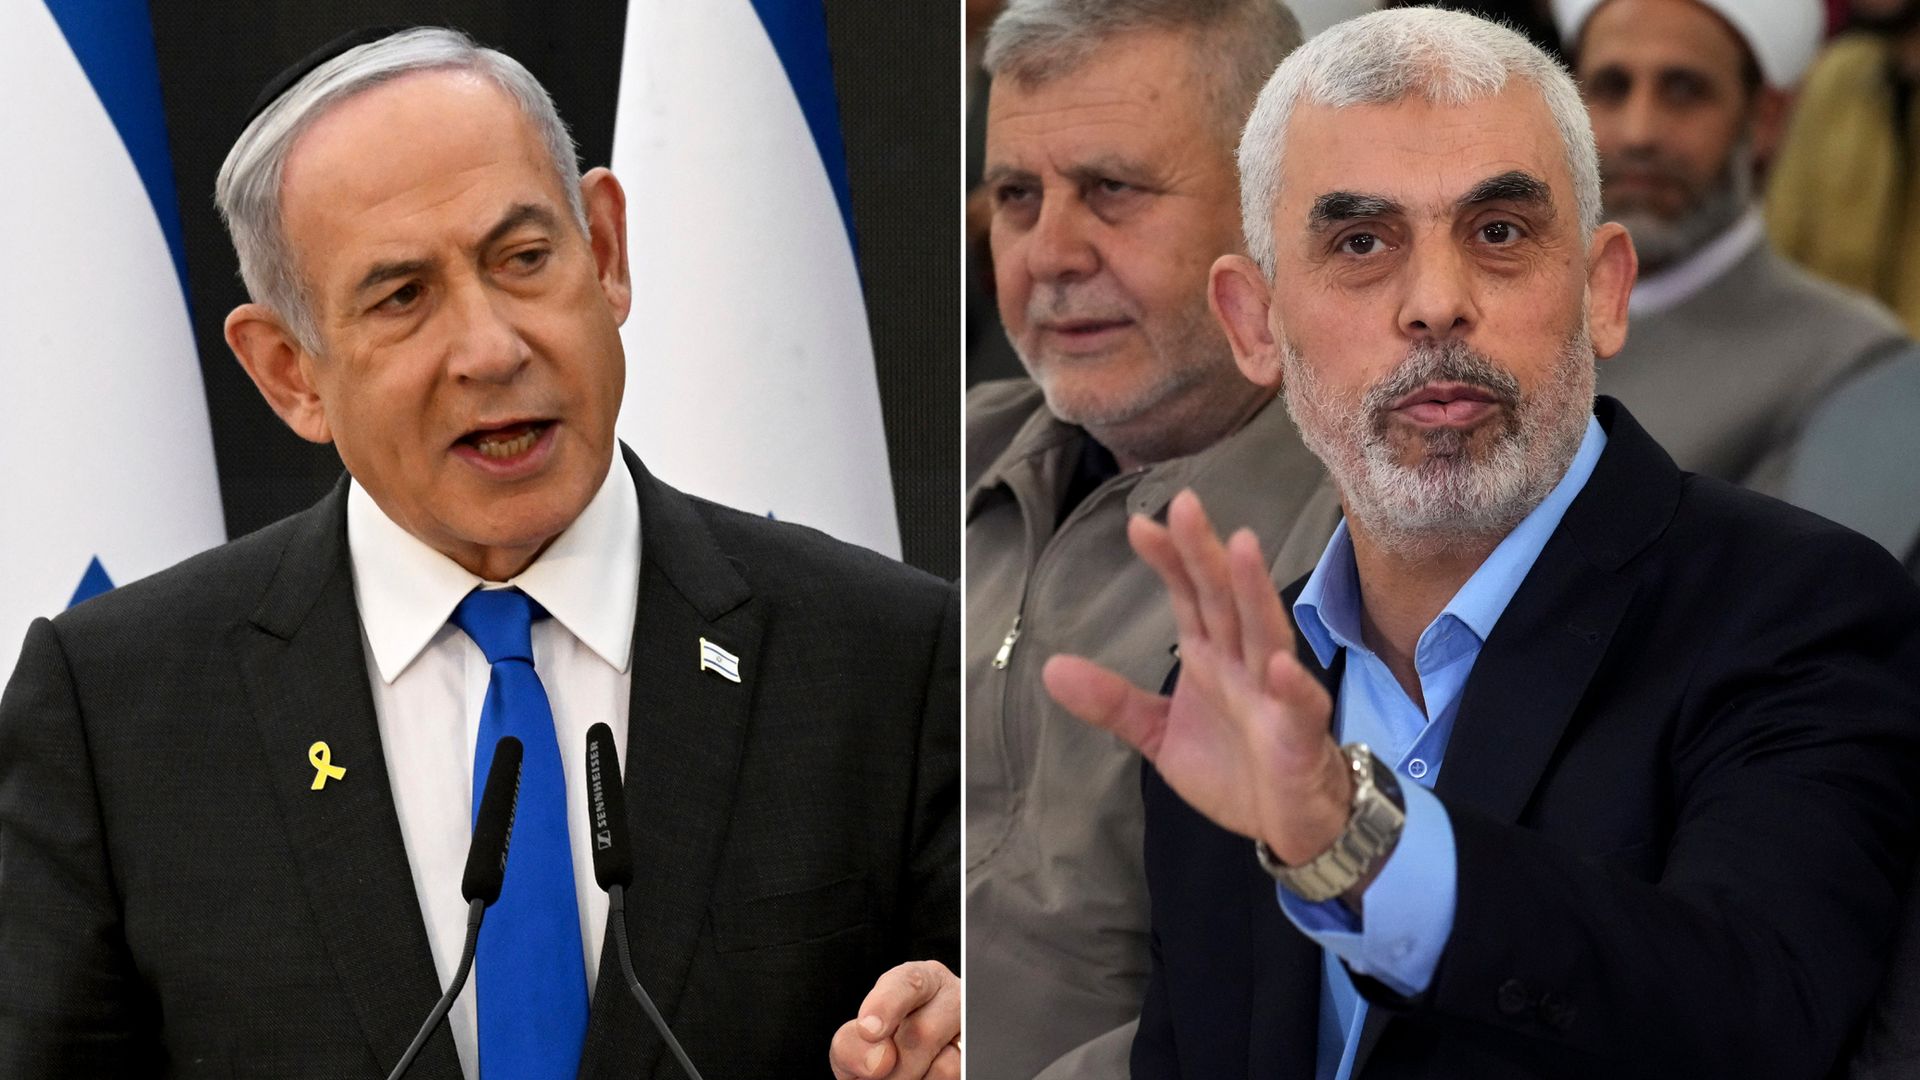 ICC prosecutor seeks arrest warrants against Netanyahu and Hamas leader